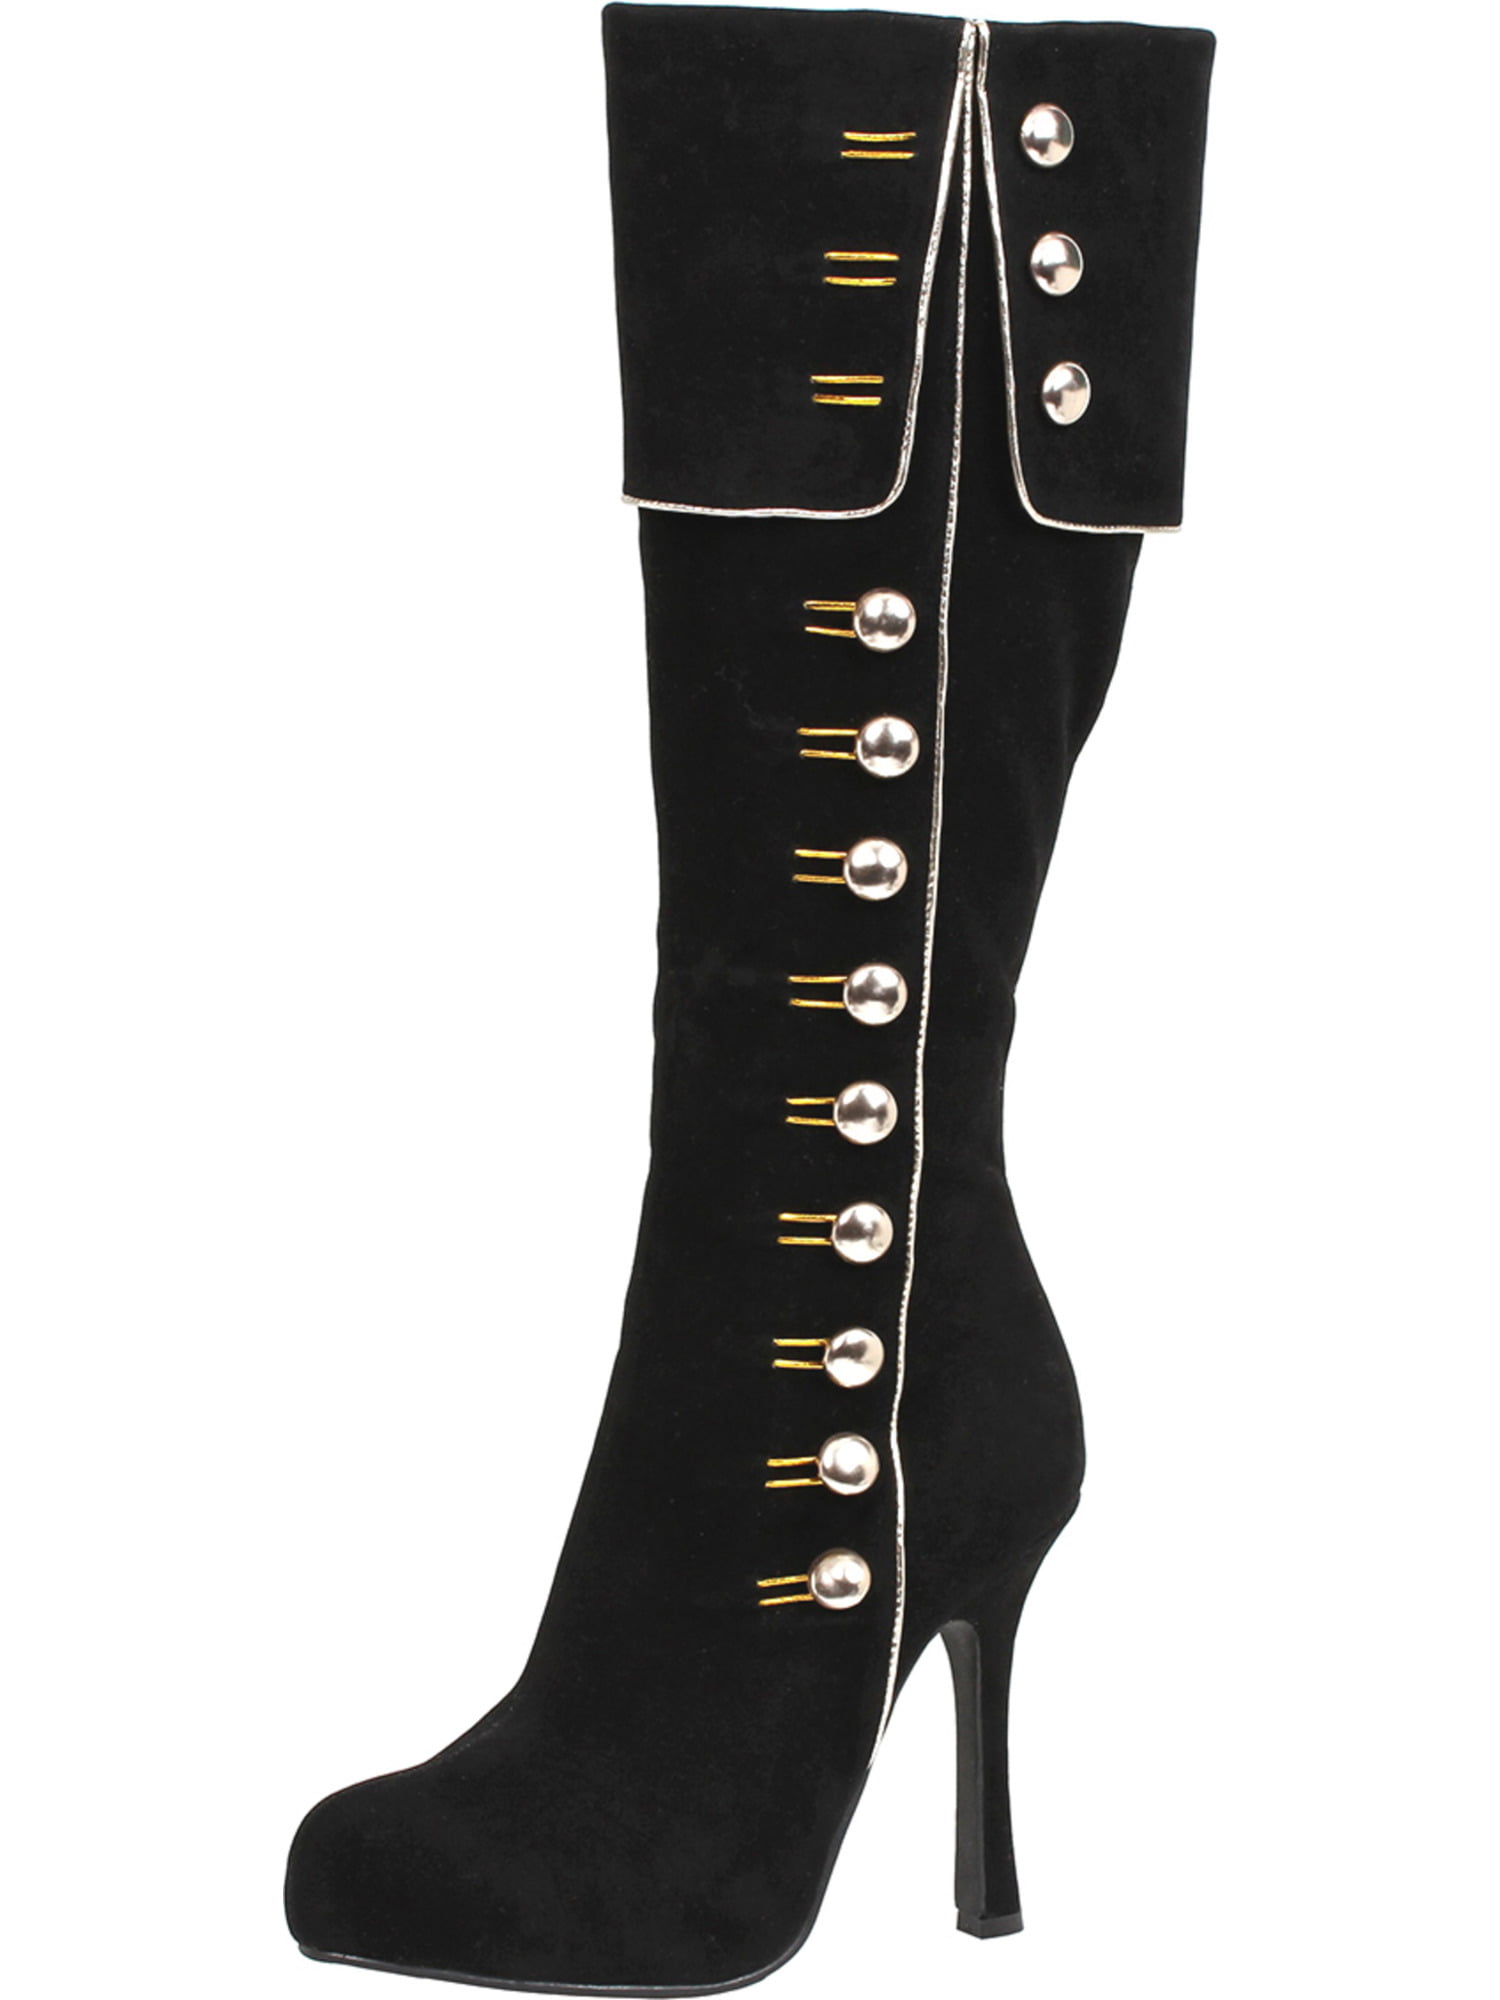 SummitFashions - Women's 4 Inch Heel Knee High Costume Boots Side ...